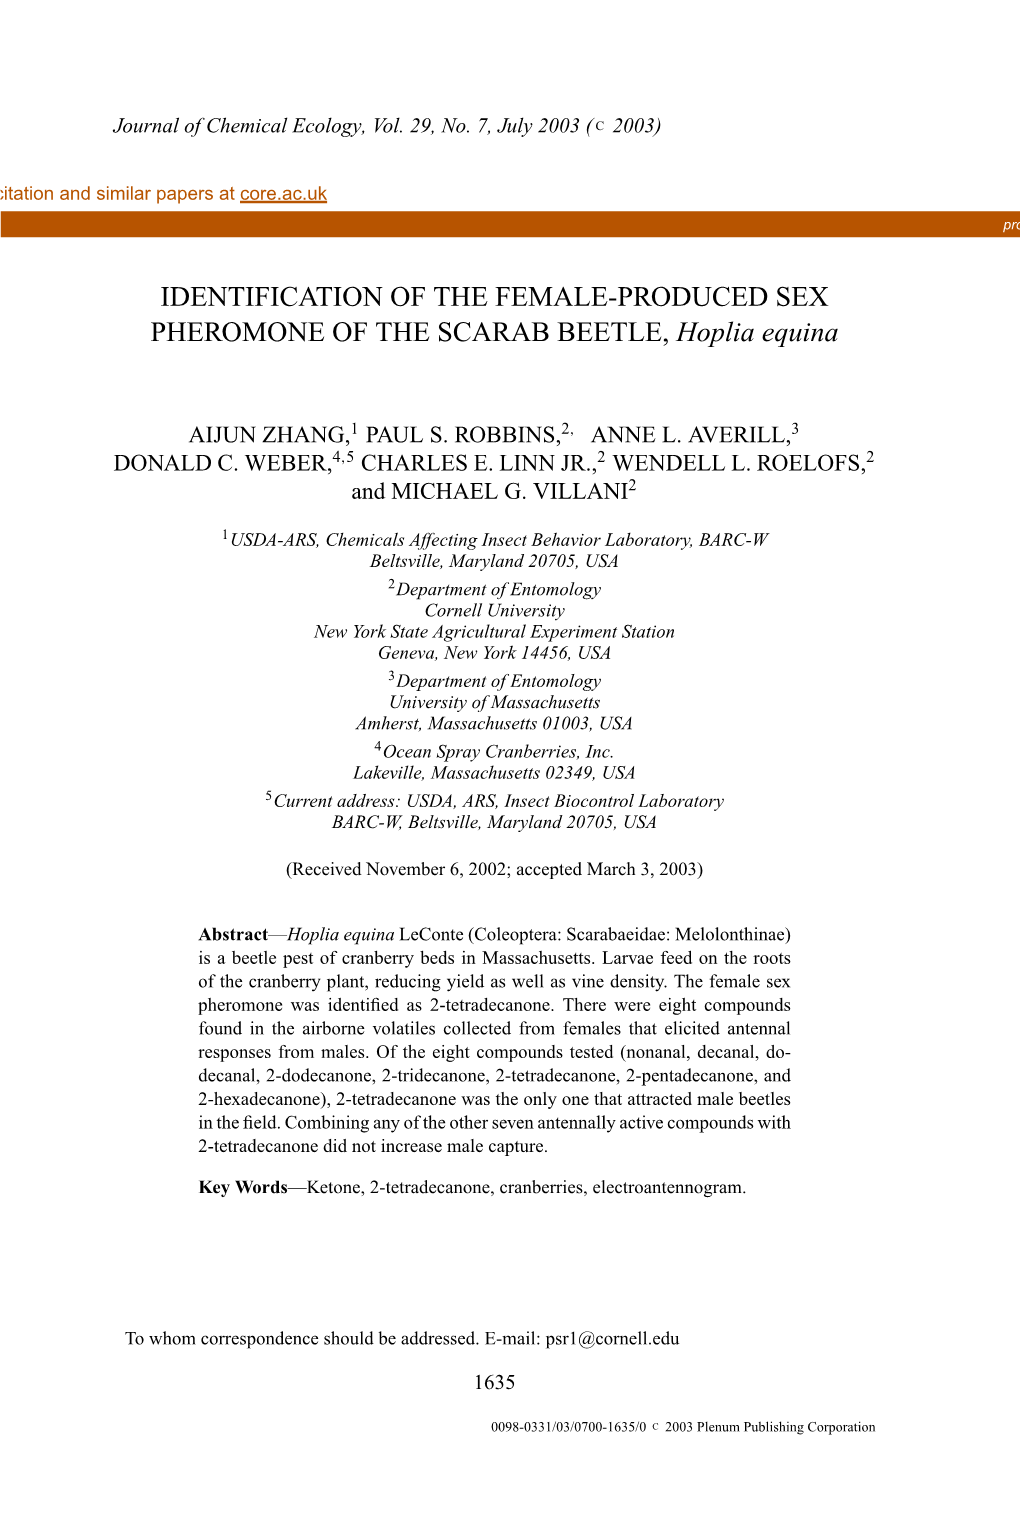 IDENTIFICATION of the FEMALE-PRODUCED SEX PHEROMONE of the SCARAB BEETLE, Hoplia Equina